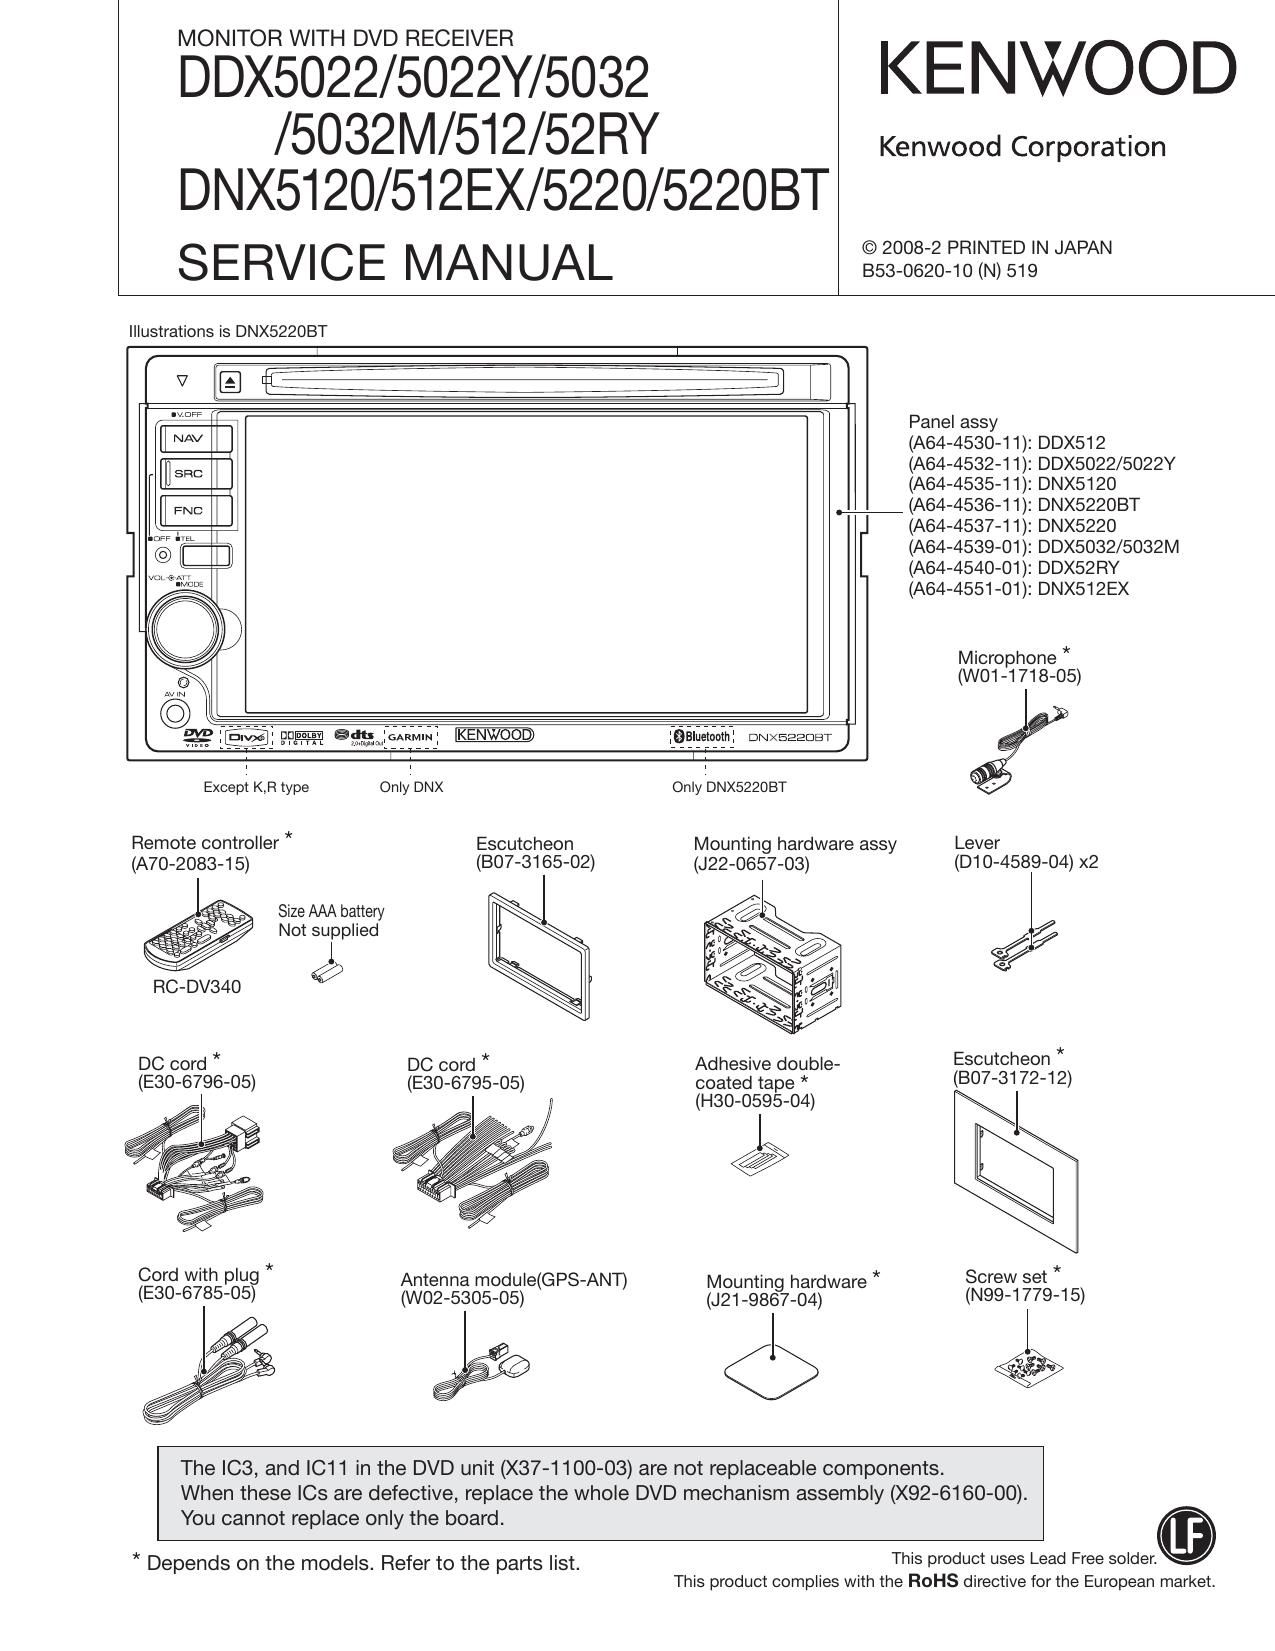 Kenwood DDX 5032 HU Service Manual